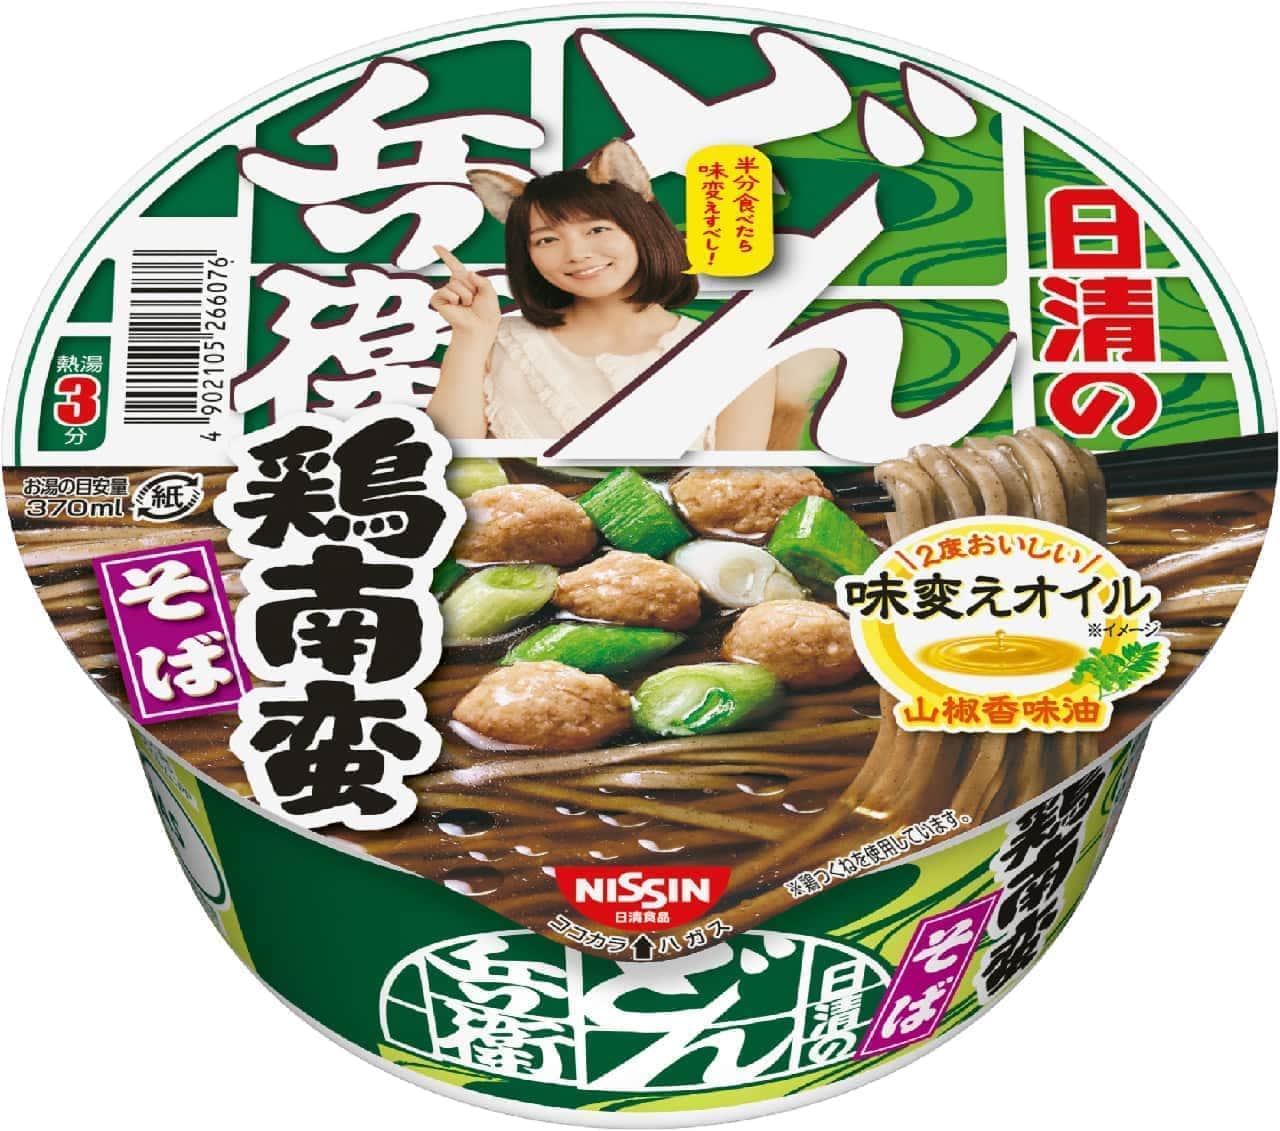 Nissin Foods "Nissin Donbei Chicken Nanban Soba with Taste Change Oil"